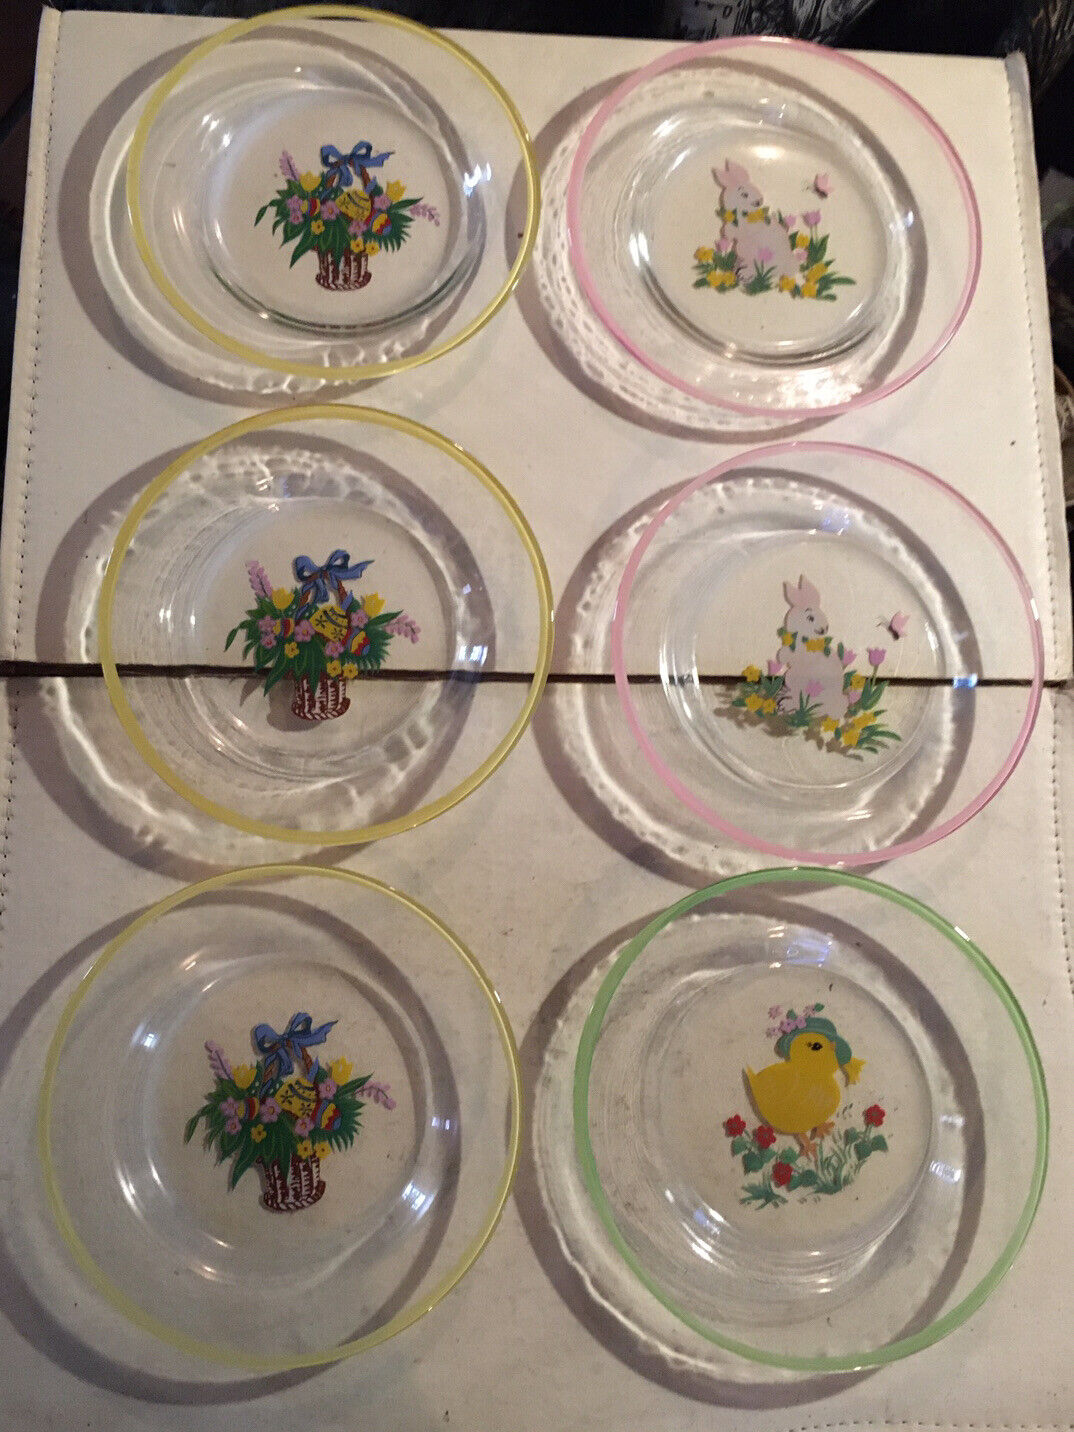 Set of 6 Easter Egg Flower Basket Plates - Cottontale Collection for Joanns